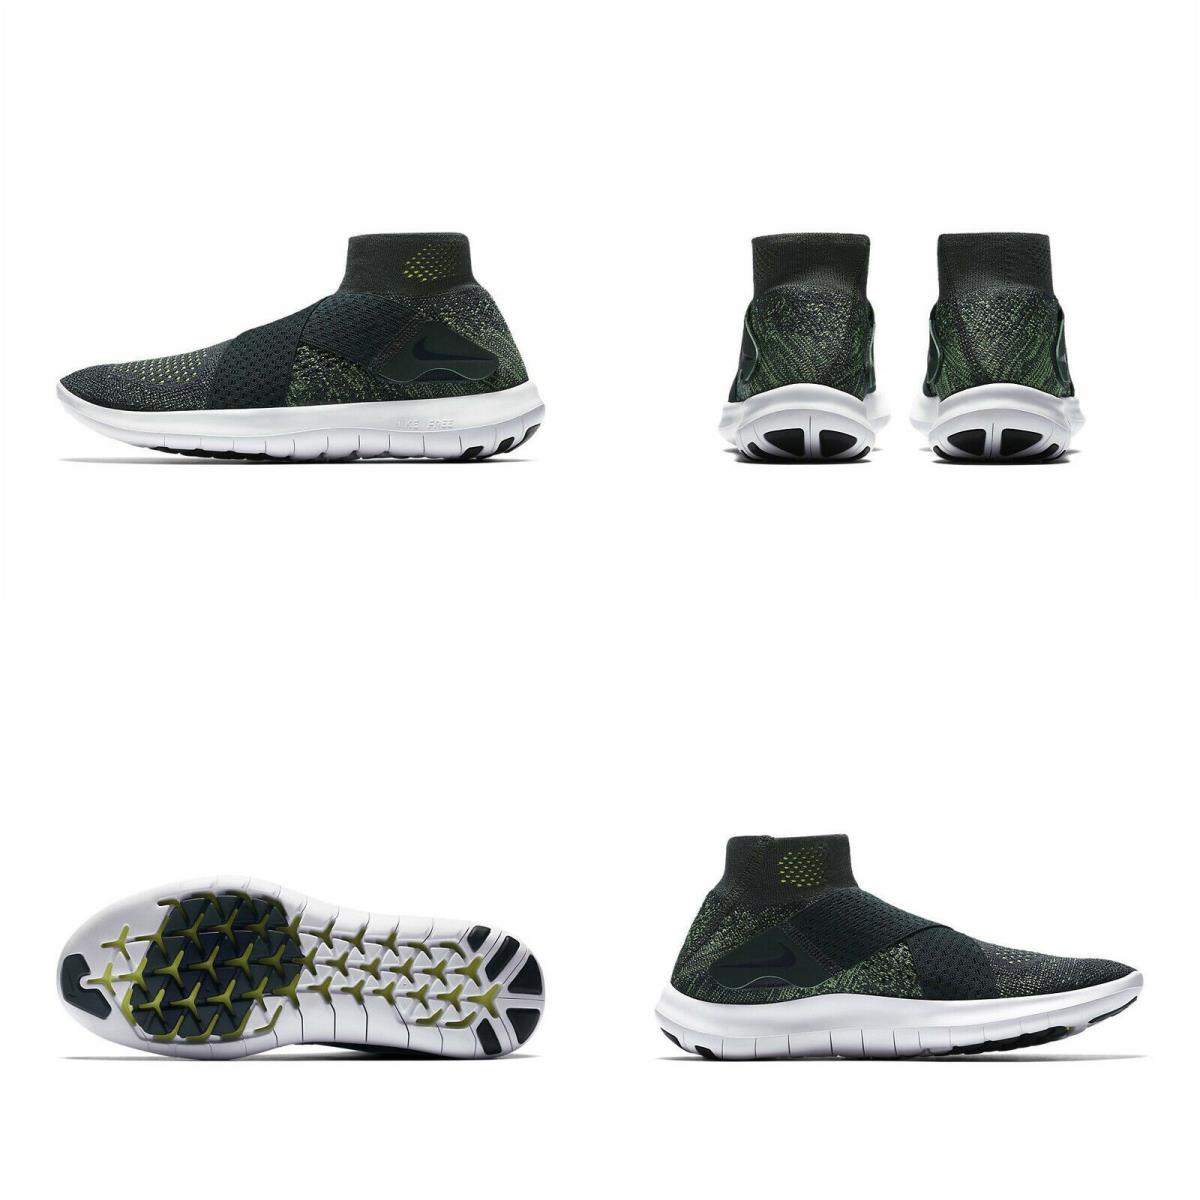 W Nike Free RN Motion FK 2017 <880846 - 301> Women`s Running Shoes - VINTAGE GREEN/VOLT-OBSIDIAN